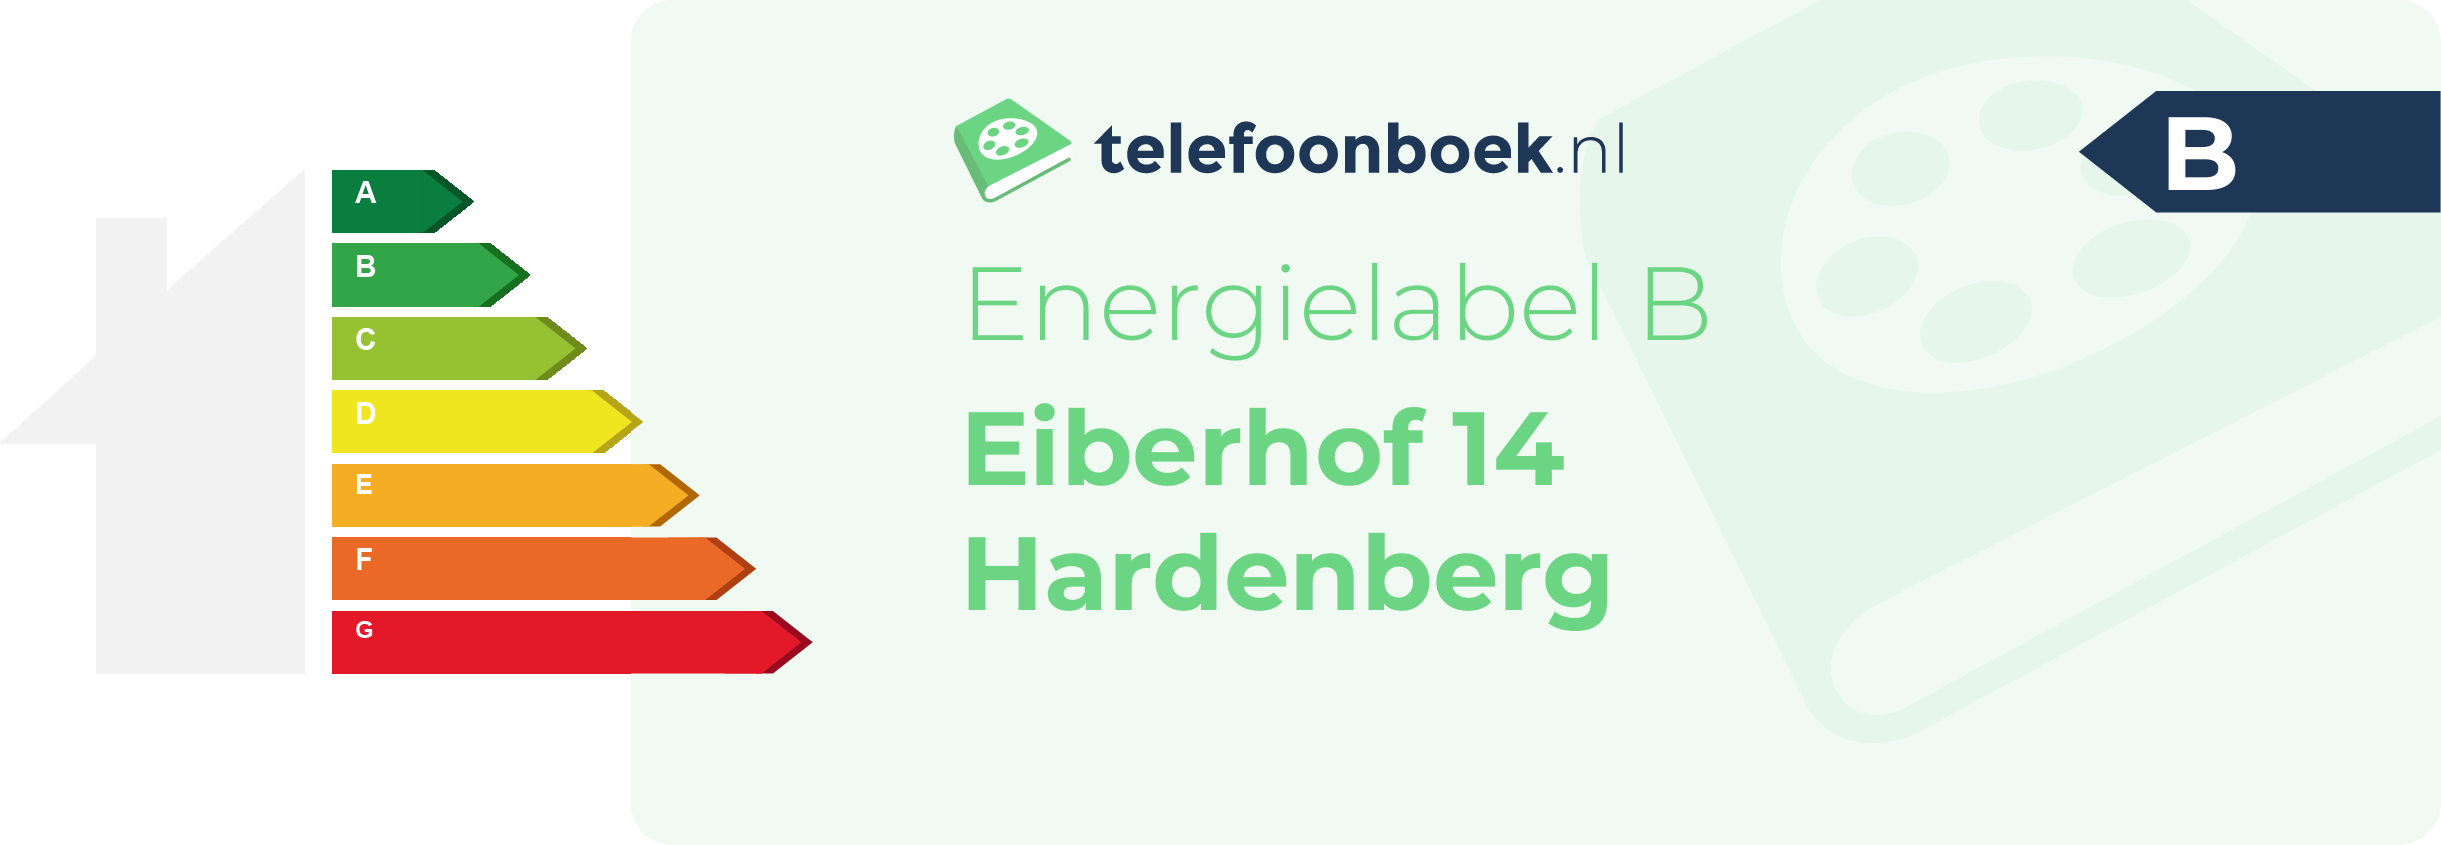 Energielabel Eiberhof 14 Hardenberg